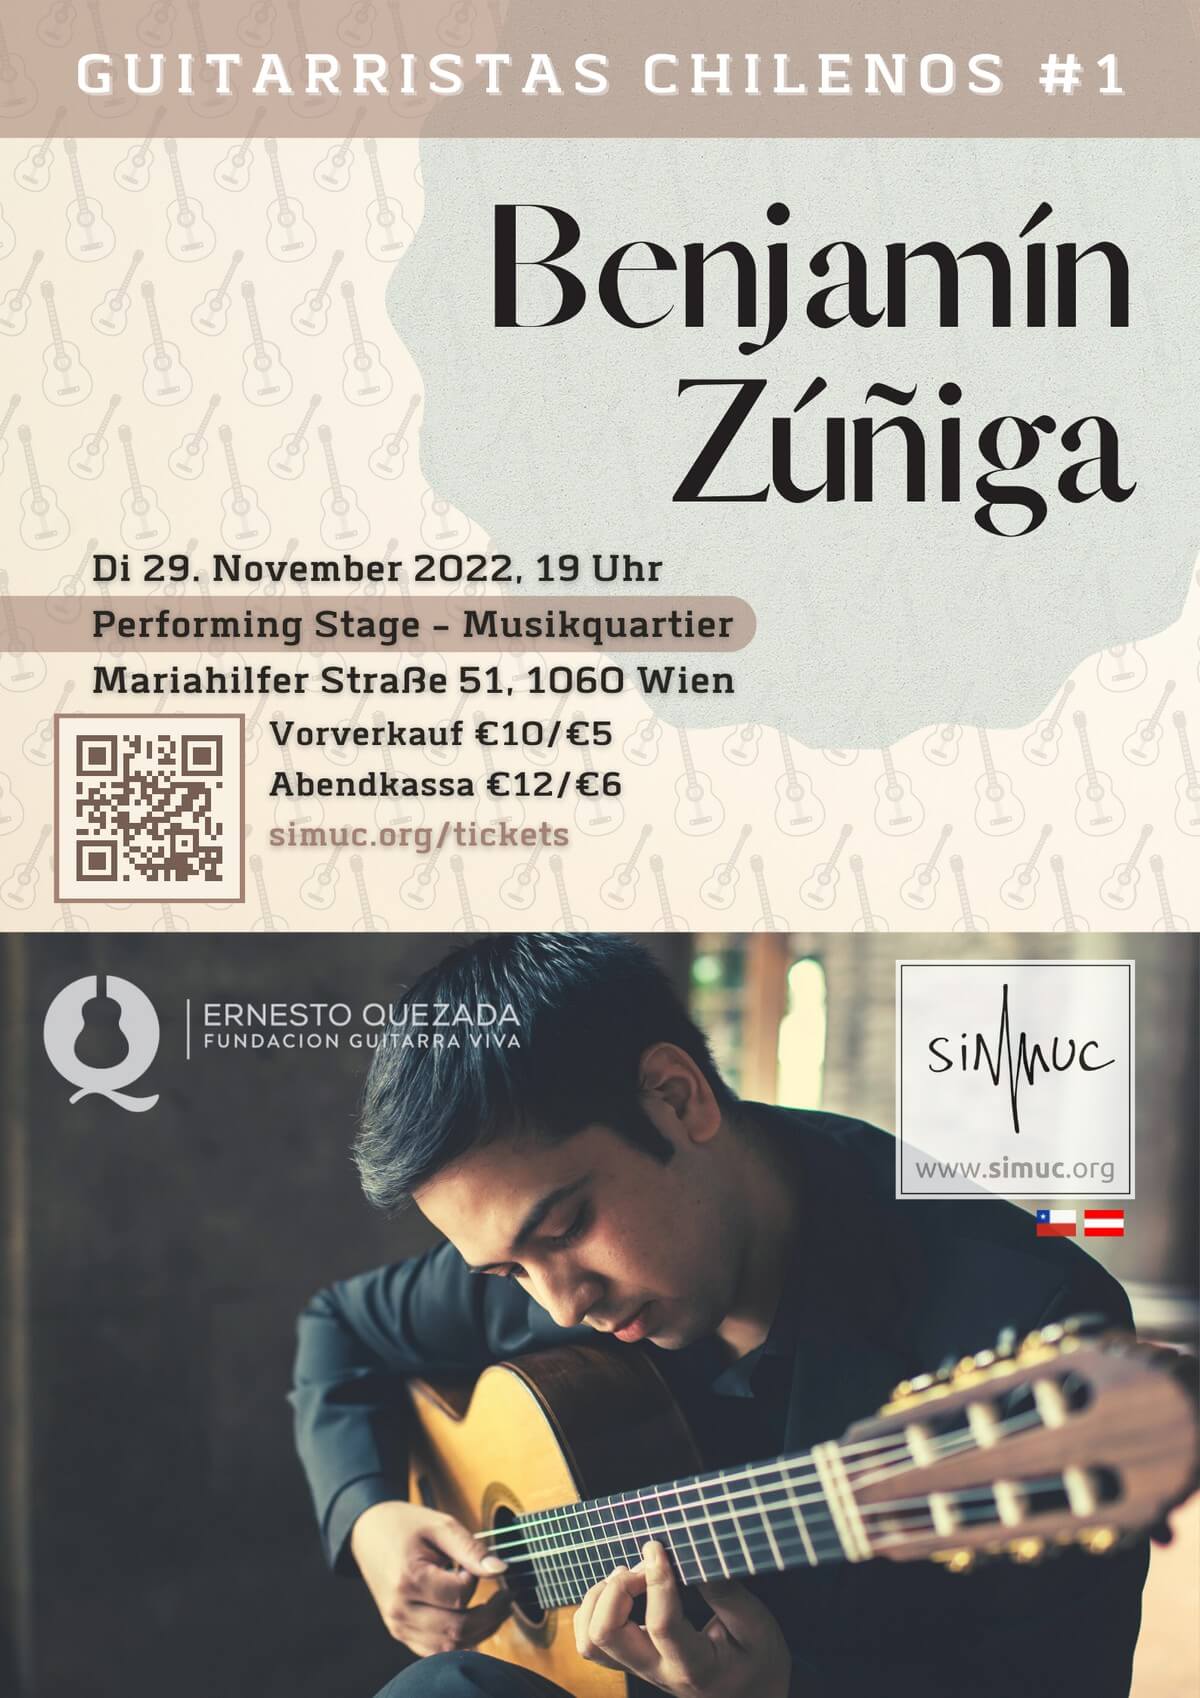 Guitarristas Chilenos #1: Benjamín Zúñiga in Vienna